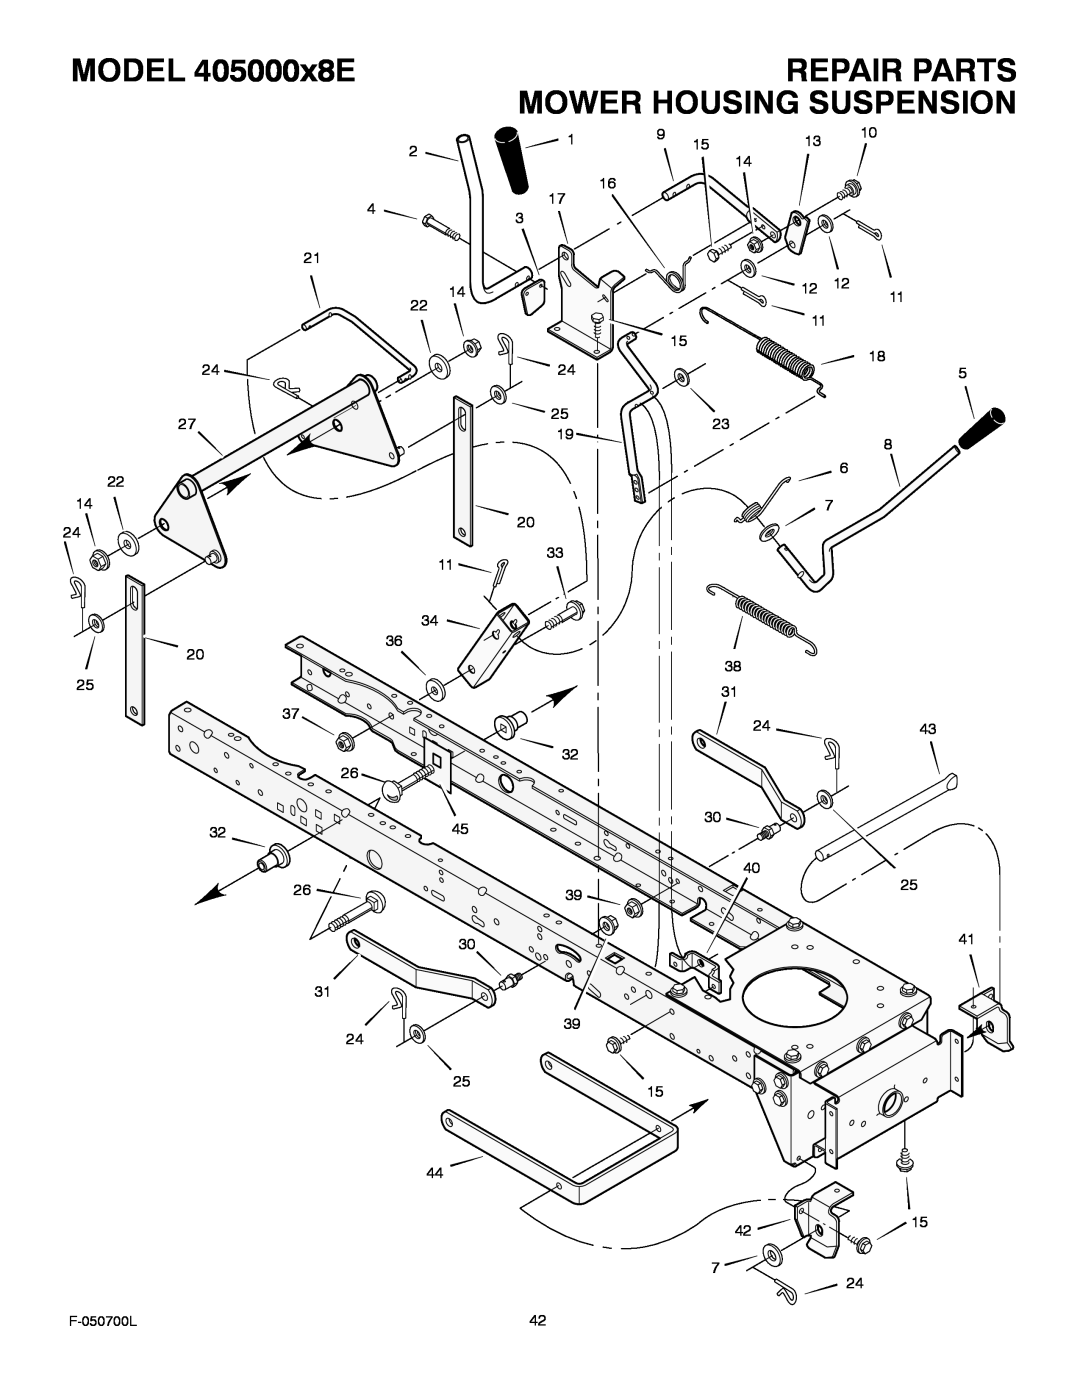 Murray manual Mower Housing Suspension, MODEL 405000x8E, Repair Parts, F-050700L 